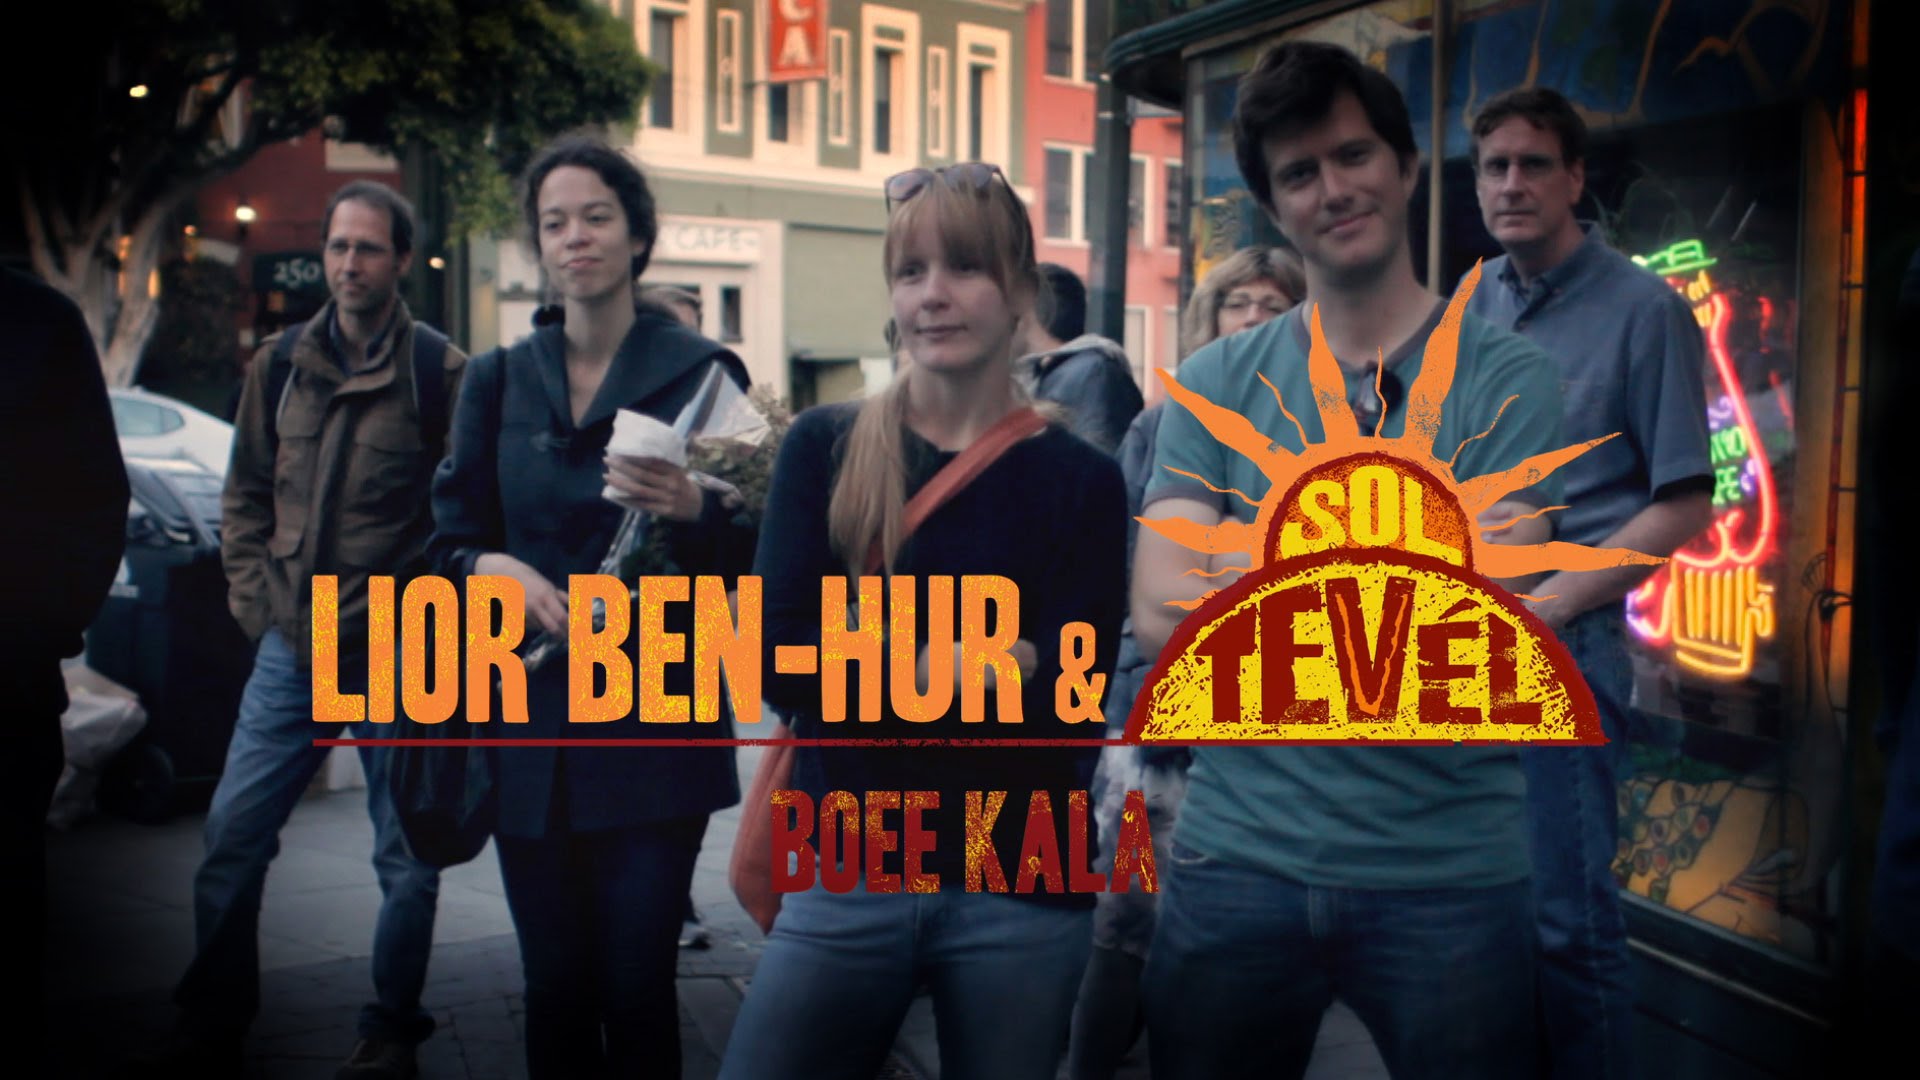 Lior Ben-Hur & Sol Tevél - Boee Kala (Lecha Dodi) [9/24/2014]